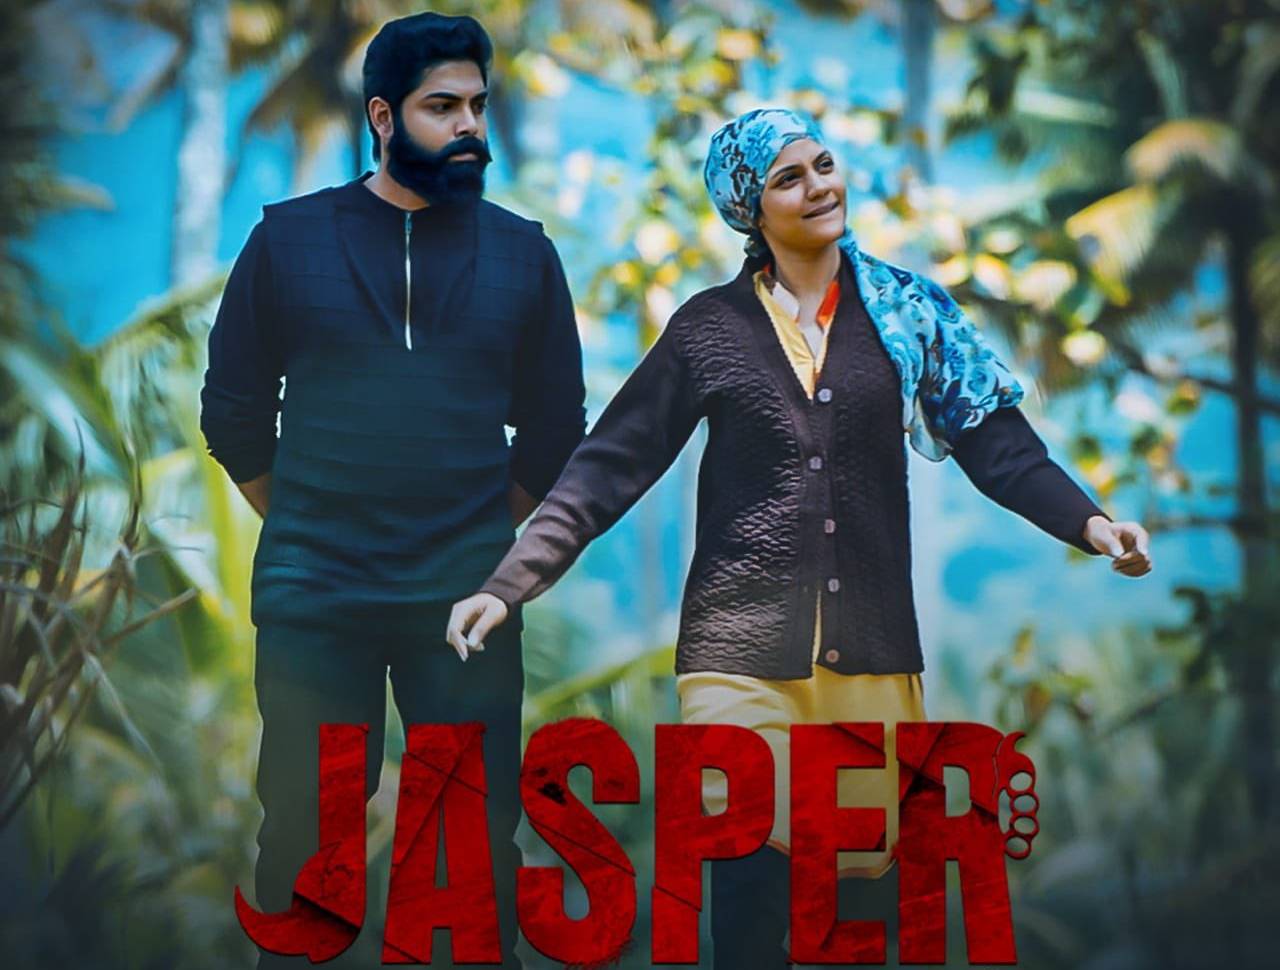 Jasper Tamil Movie